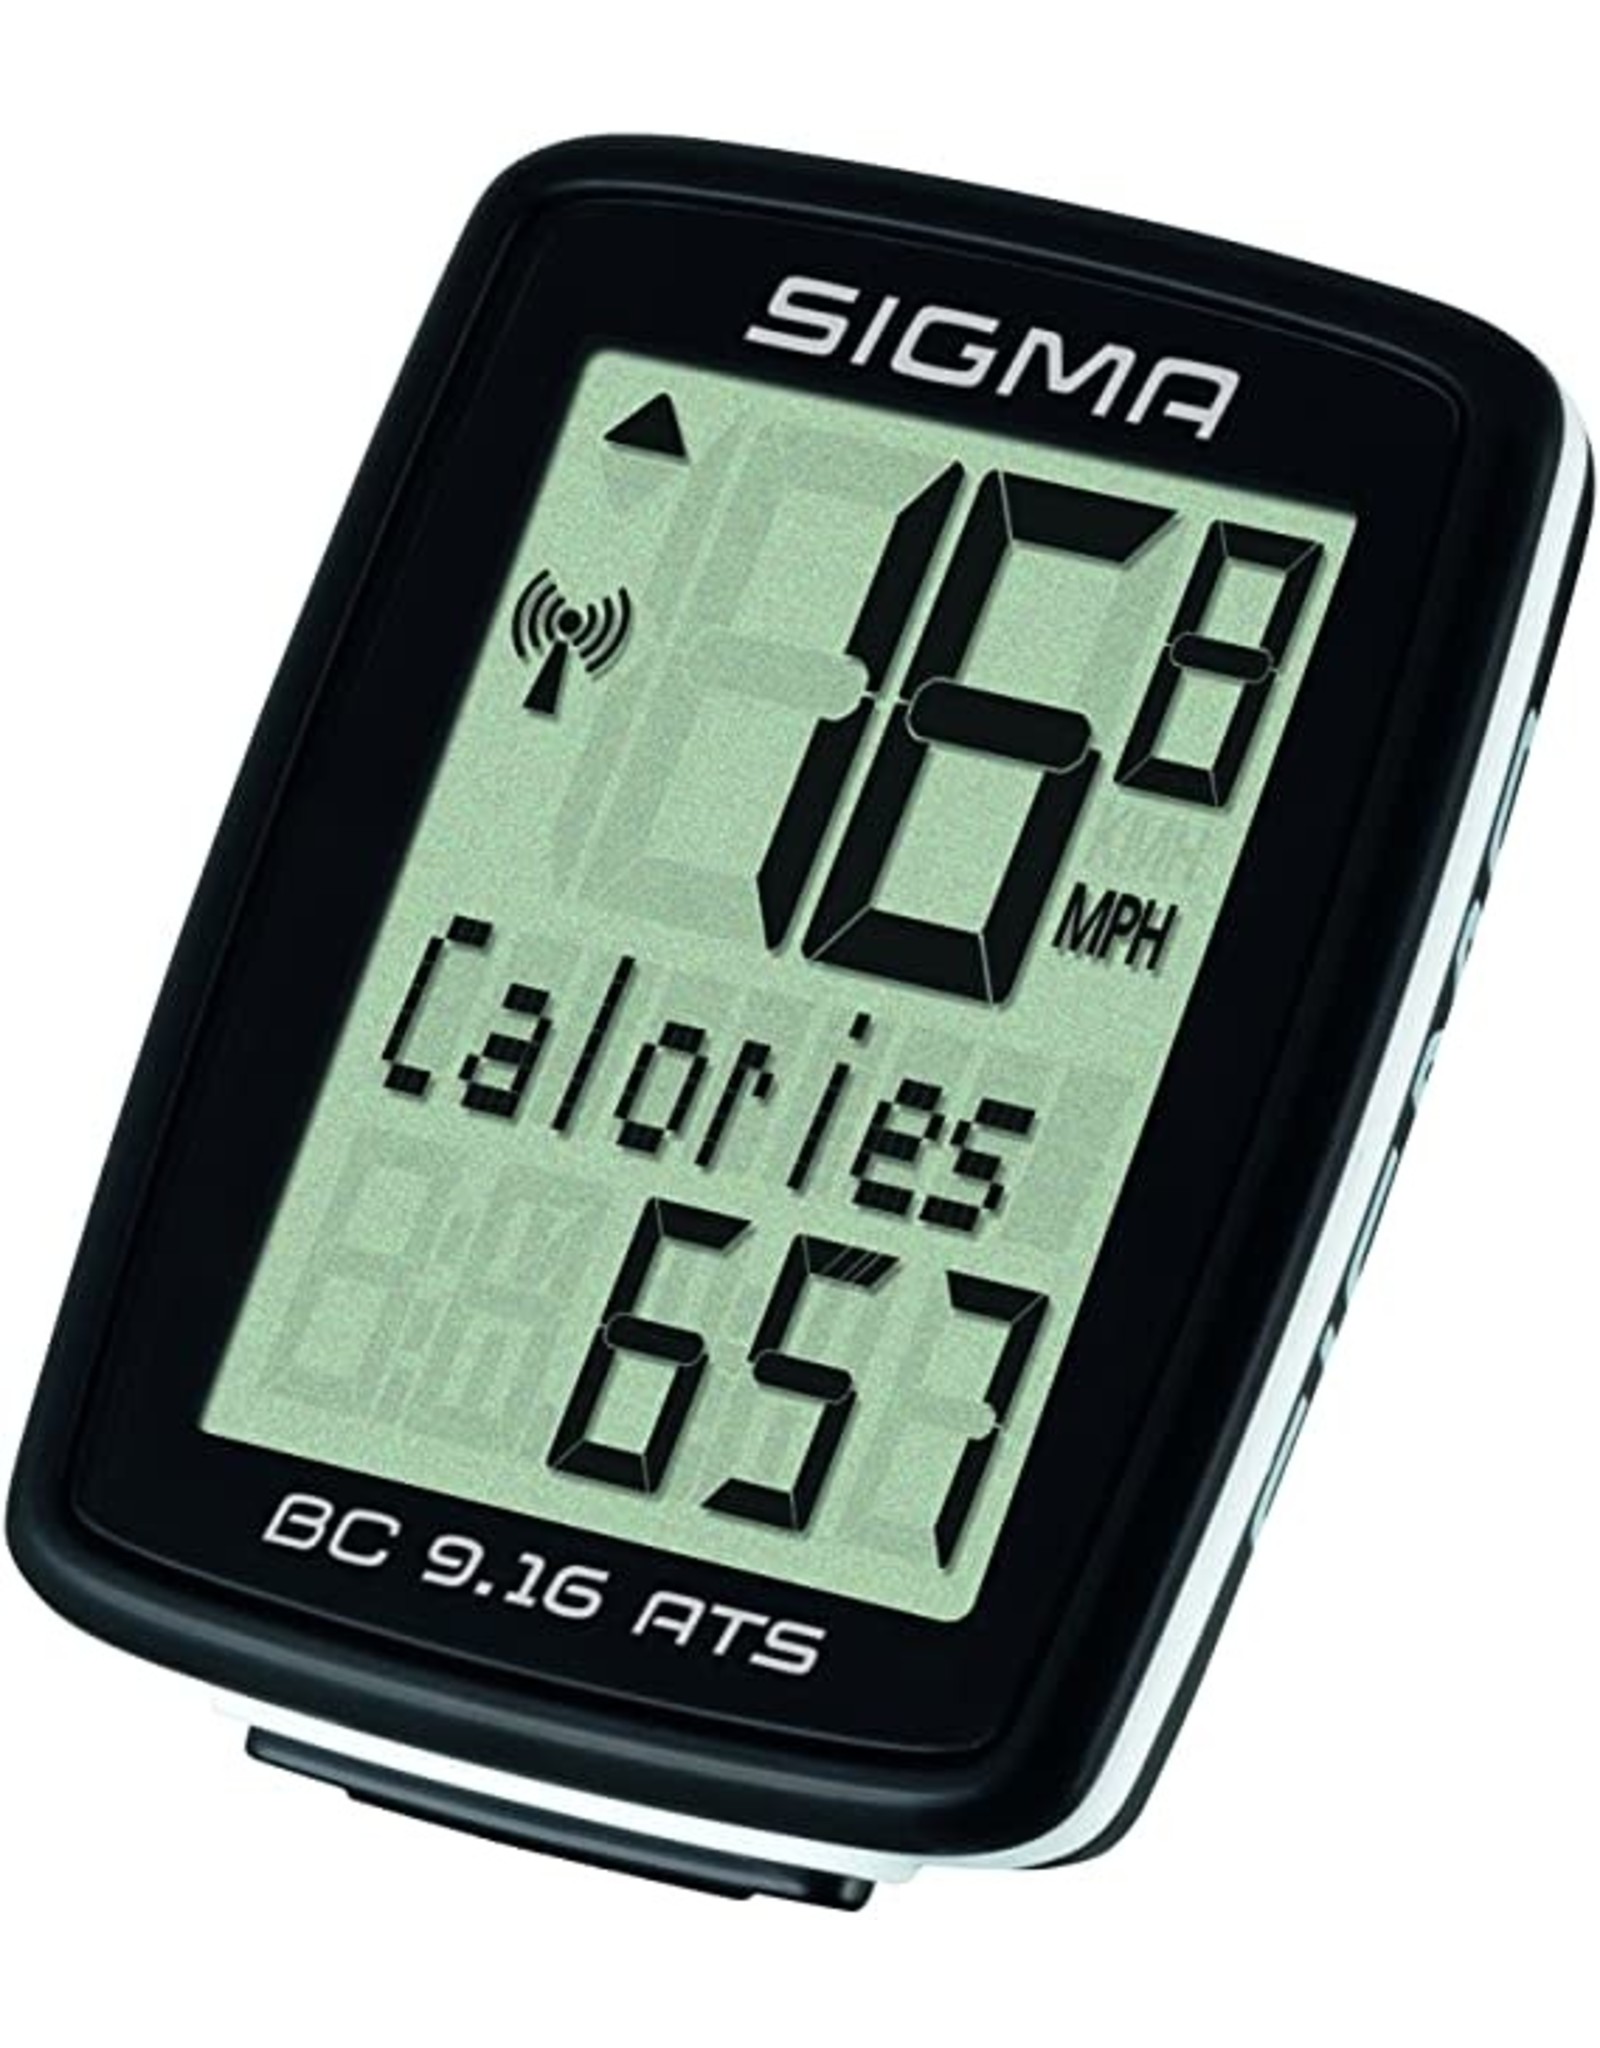 Sigma Sigma - BC 7.16 ATS Bike Computer - Wireless, Black